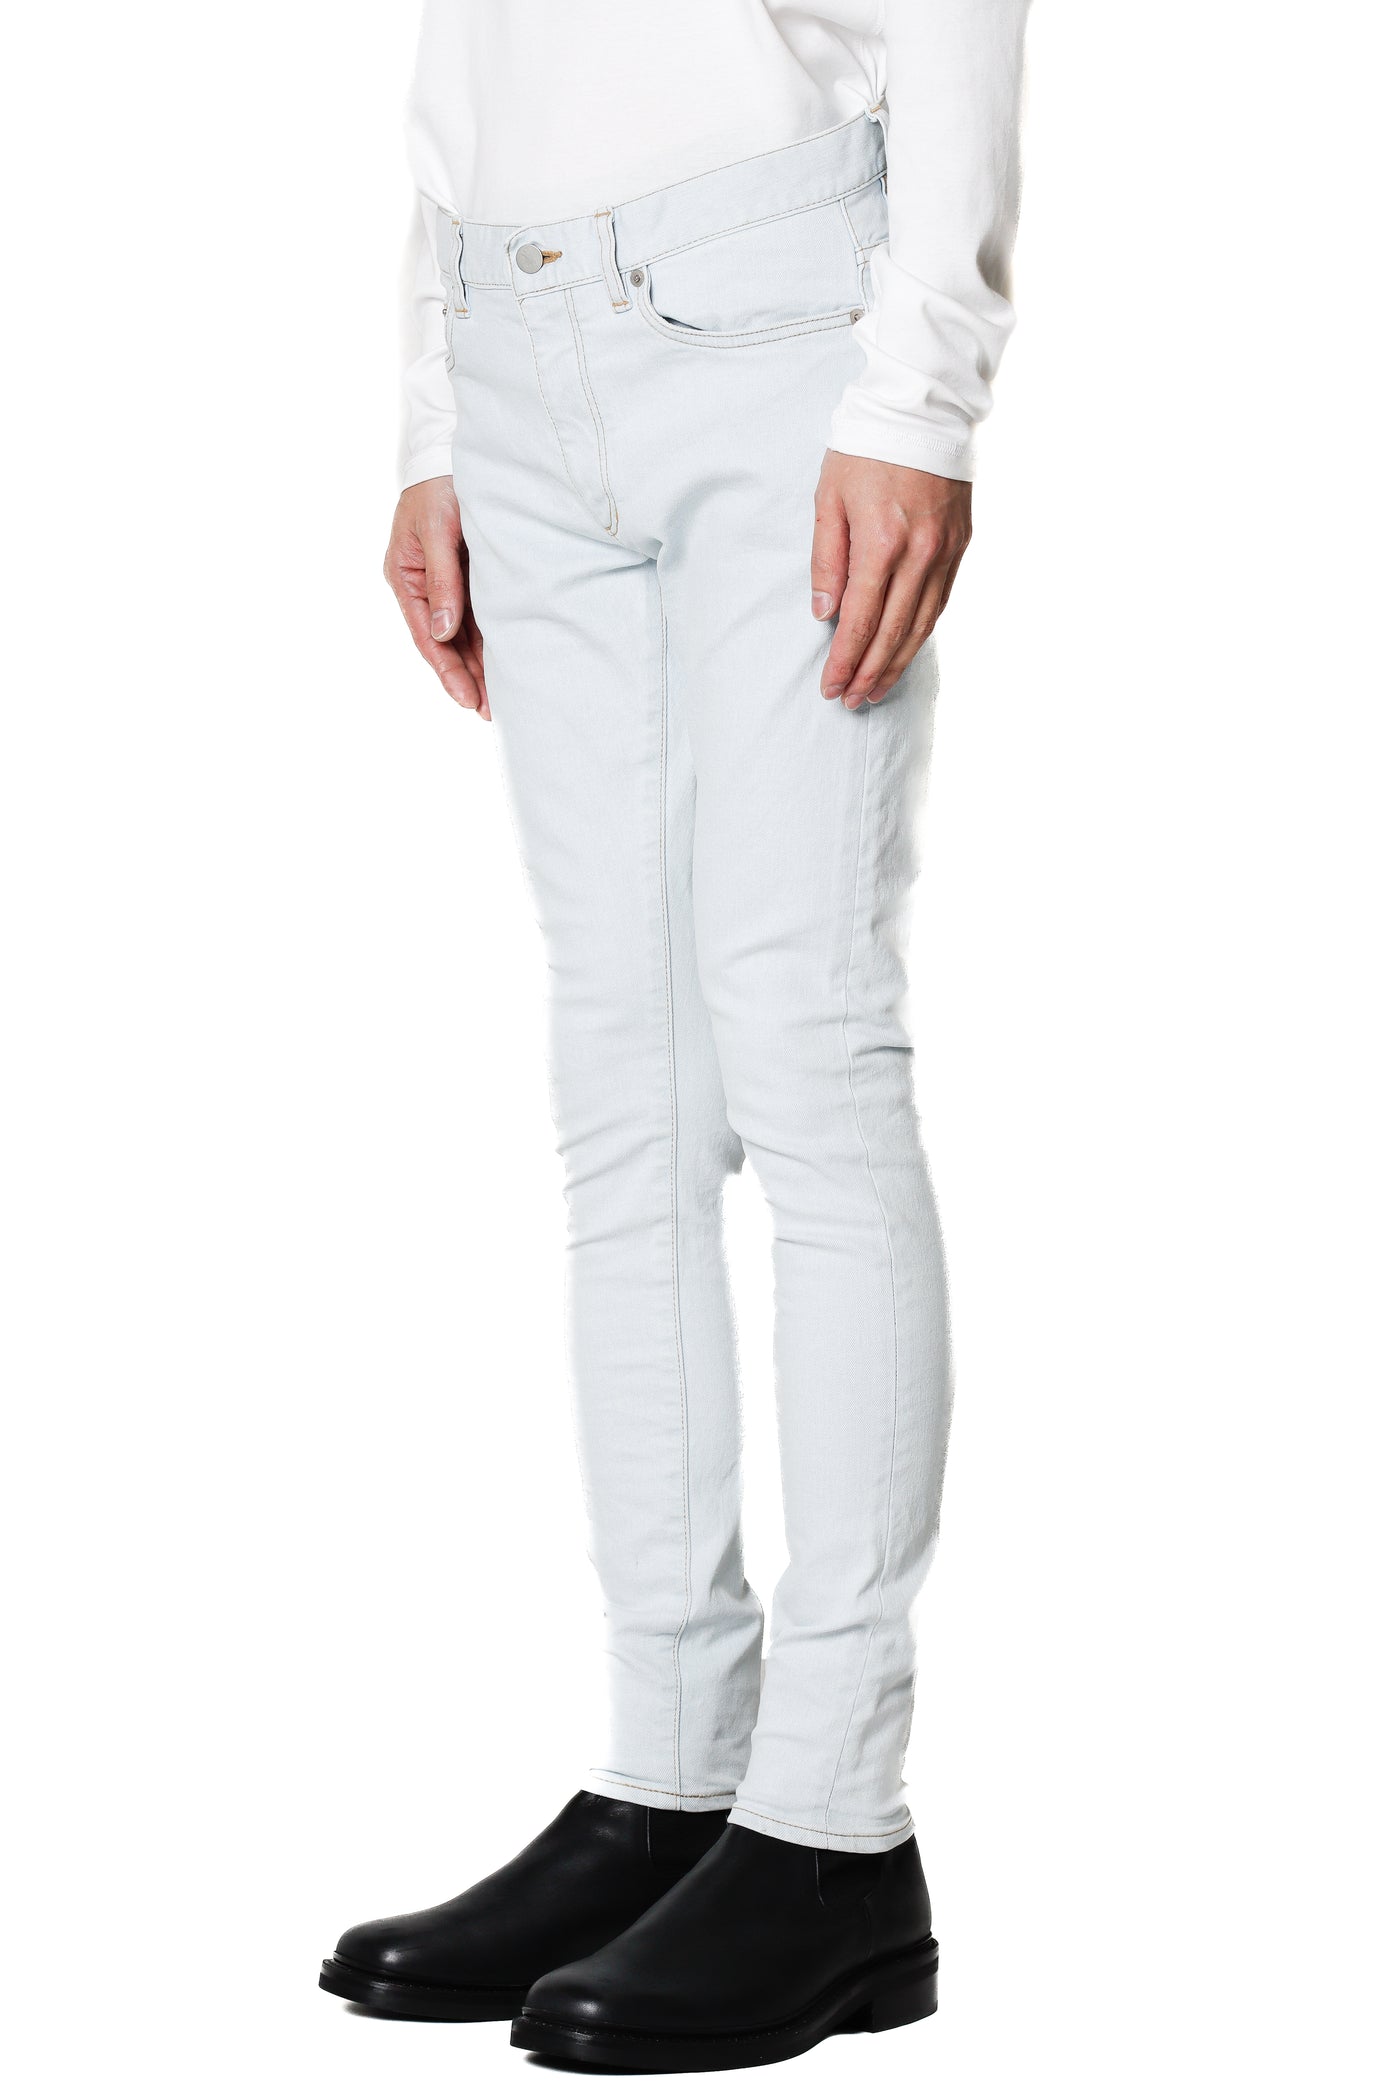 Limited product AP32-099 Supima cotton stretch 5 pocket skinny pants (light blue)